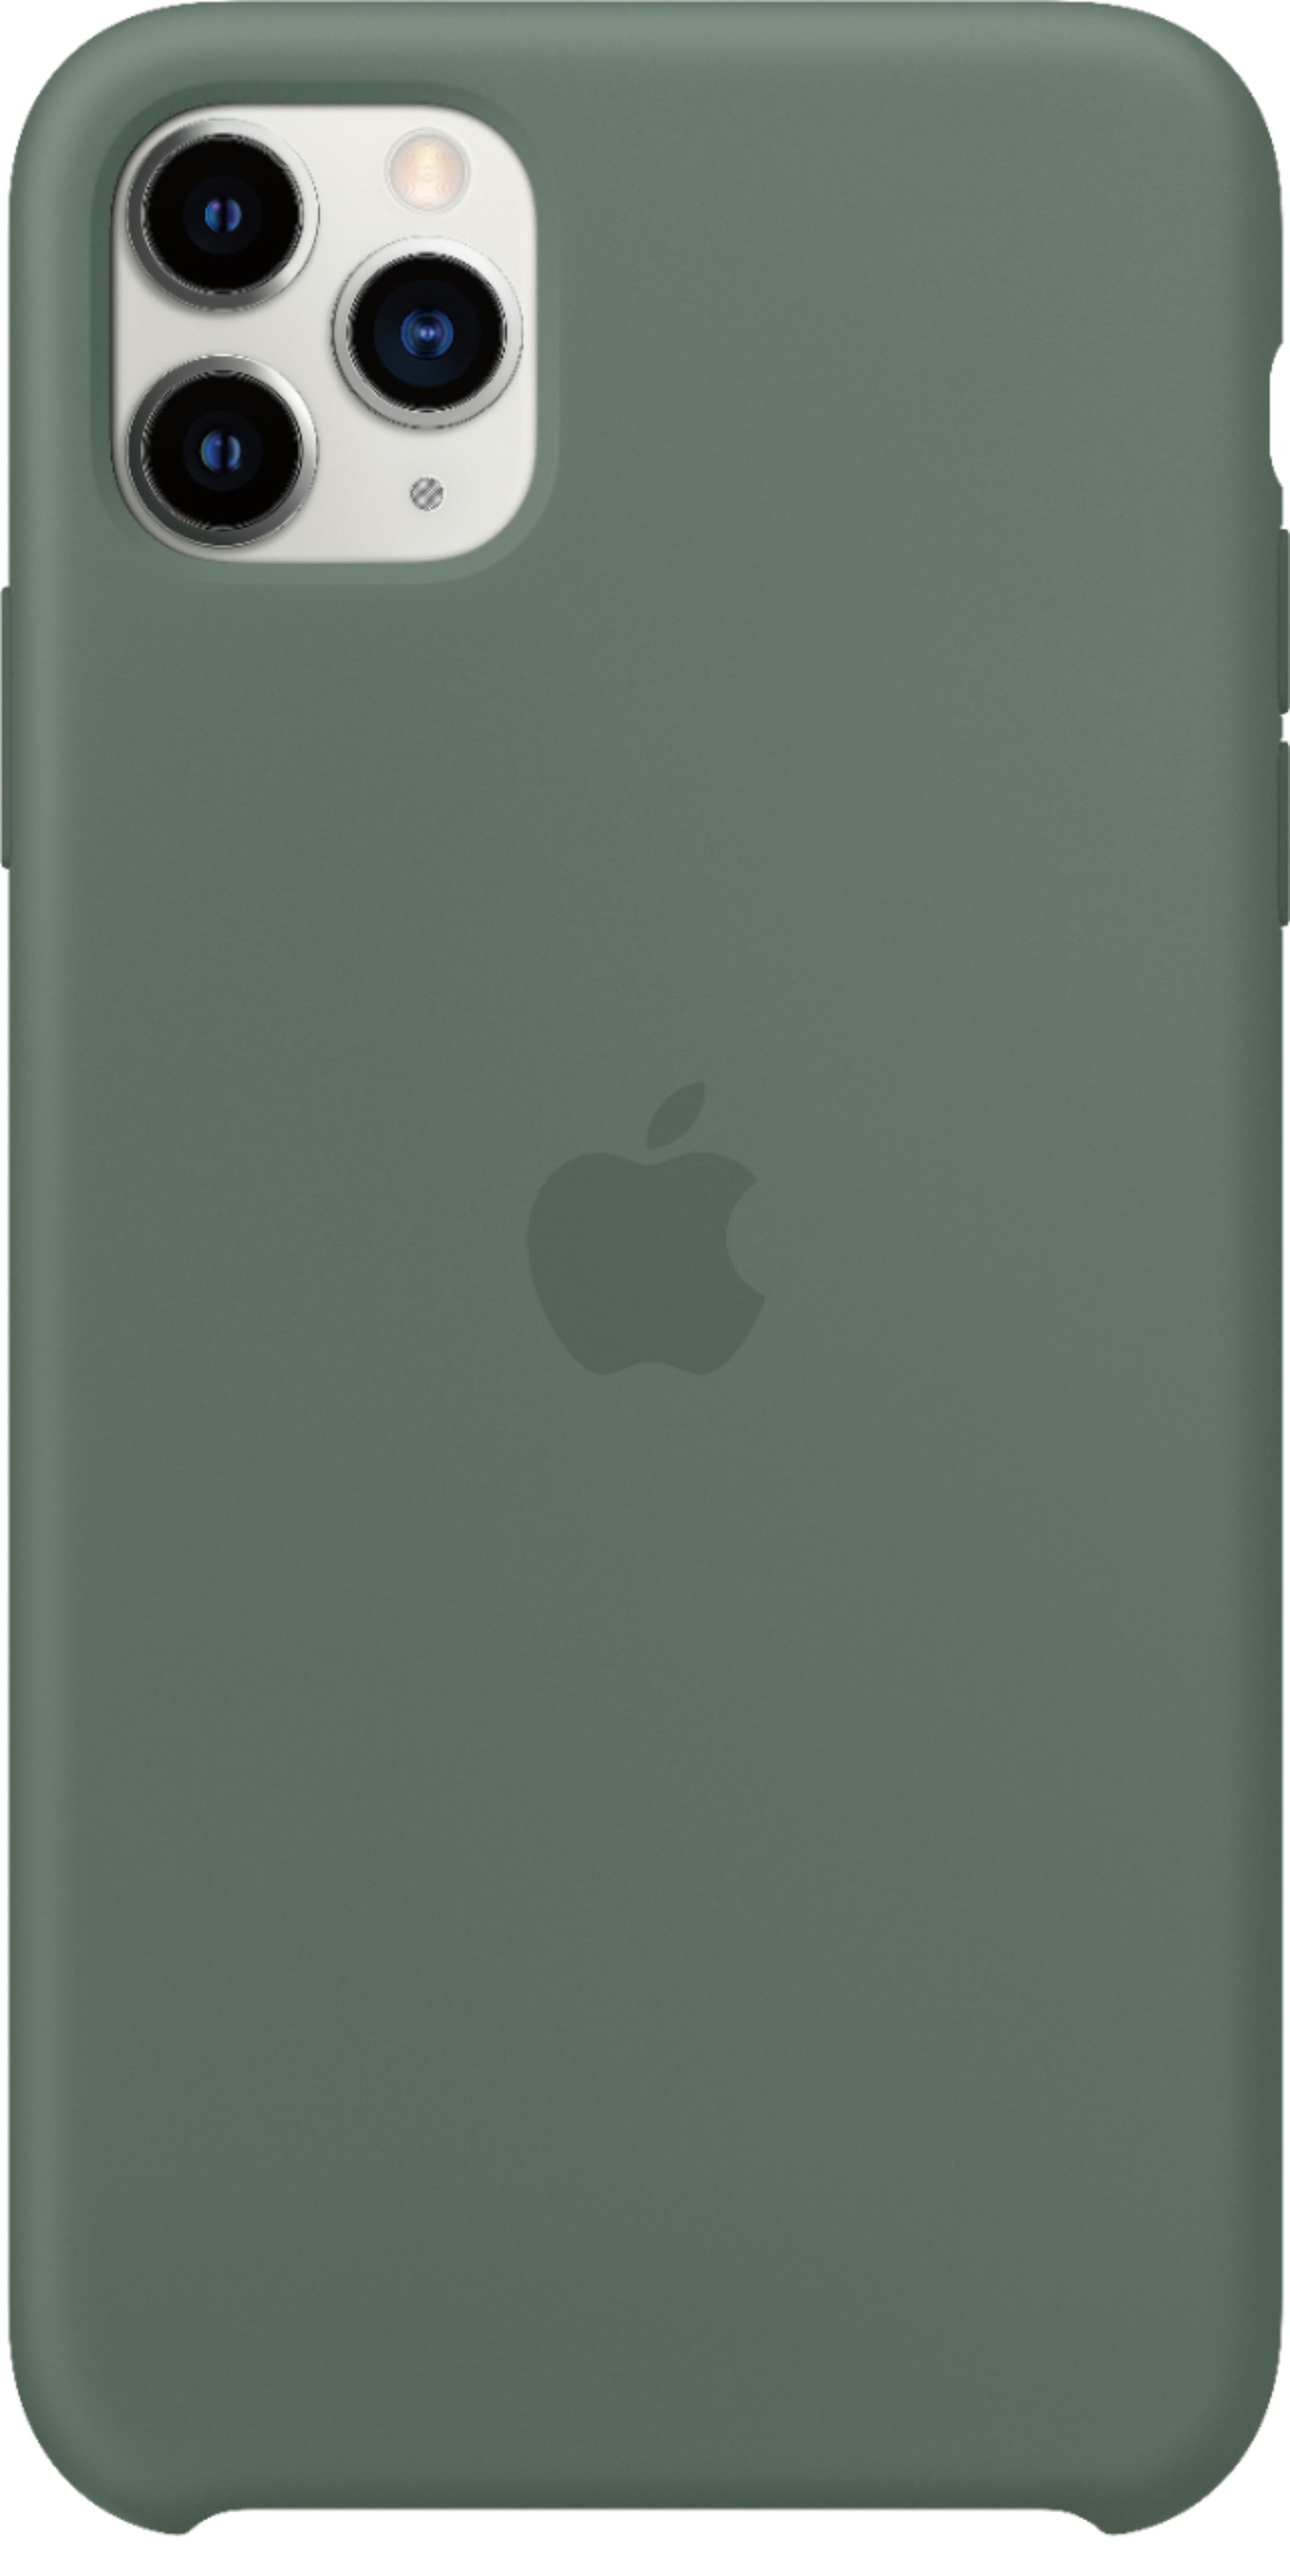 Flexible iPhone 11, 11 Pro, 11 Pro Max case by MatthiasChristiaens